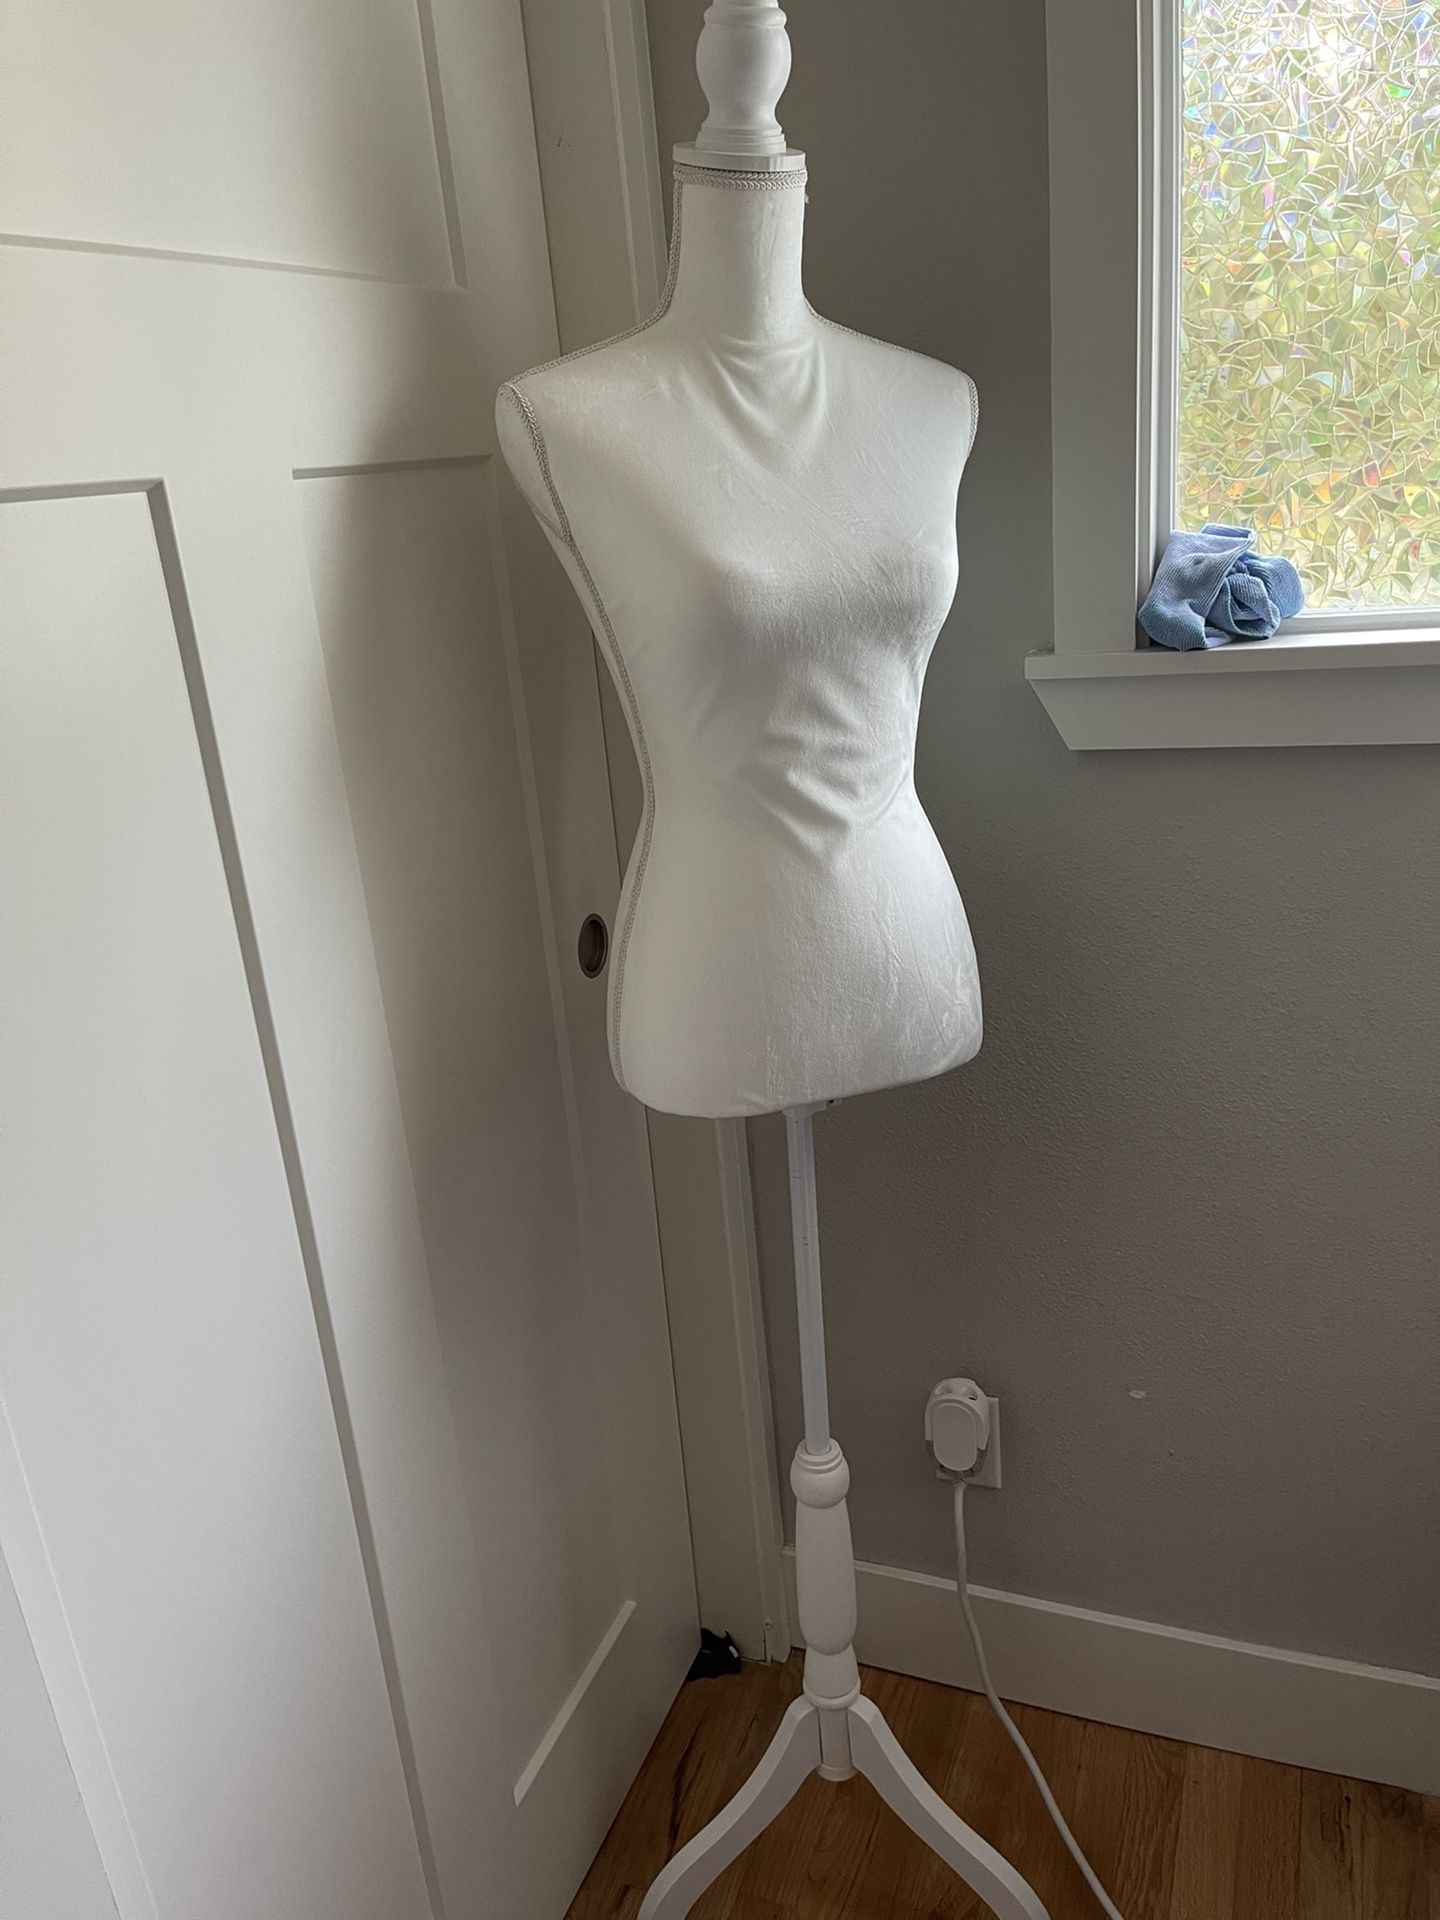 Female Dress Form - Clothing Mannequin